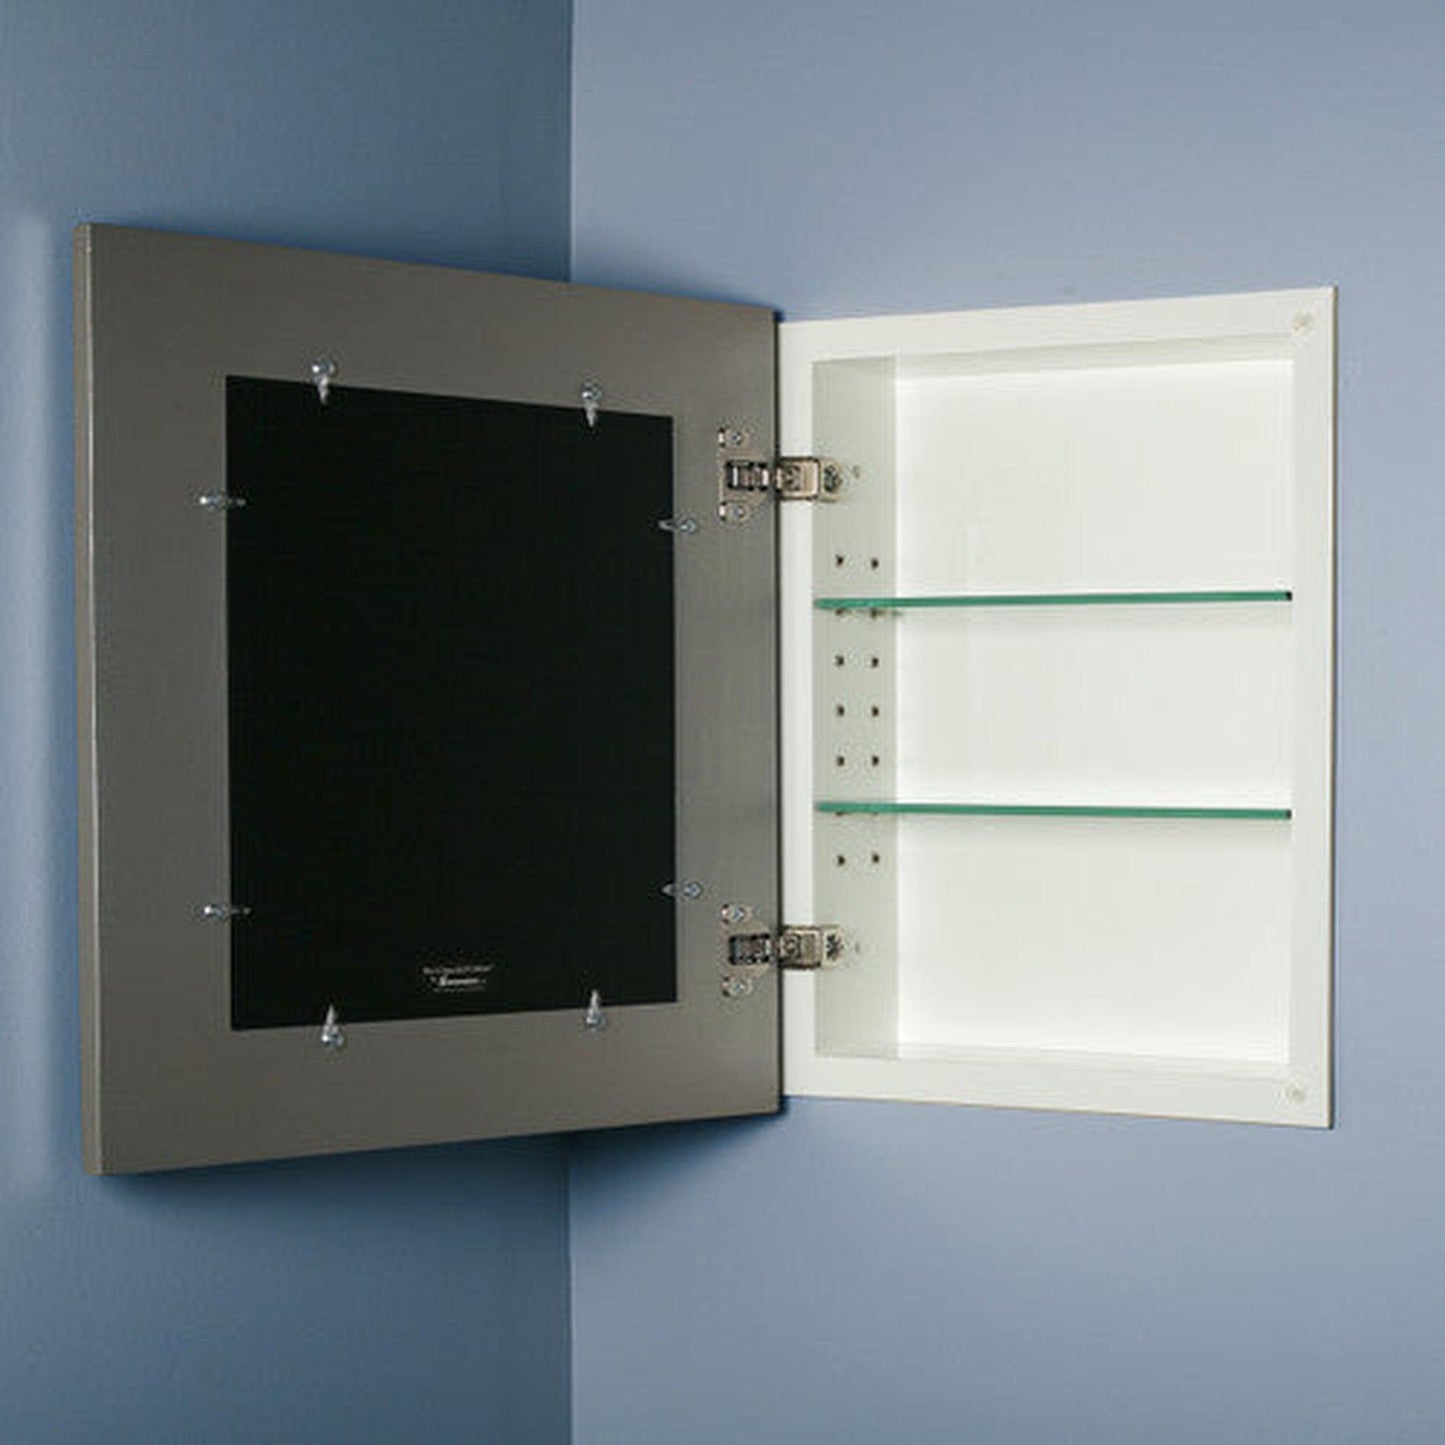 Fox Hollow Furnishings 14" x 18" Silver Standard 4" Depth White Interior Mirrored Medicine Cabinet